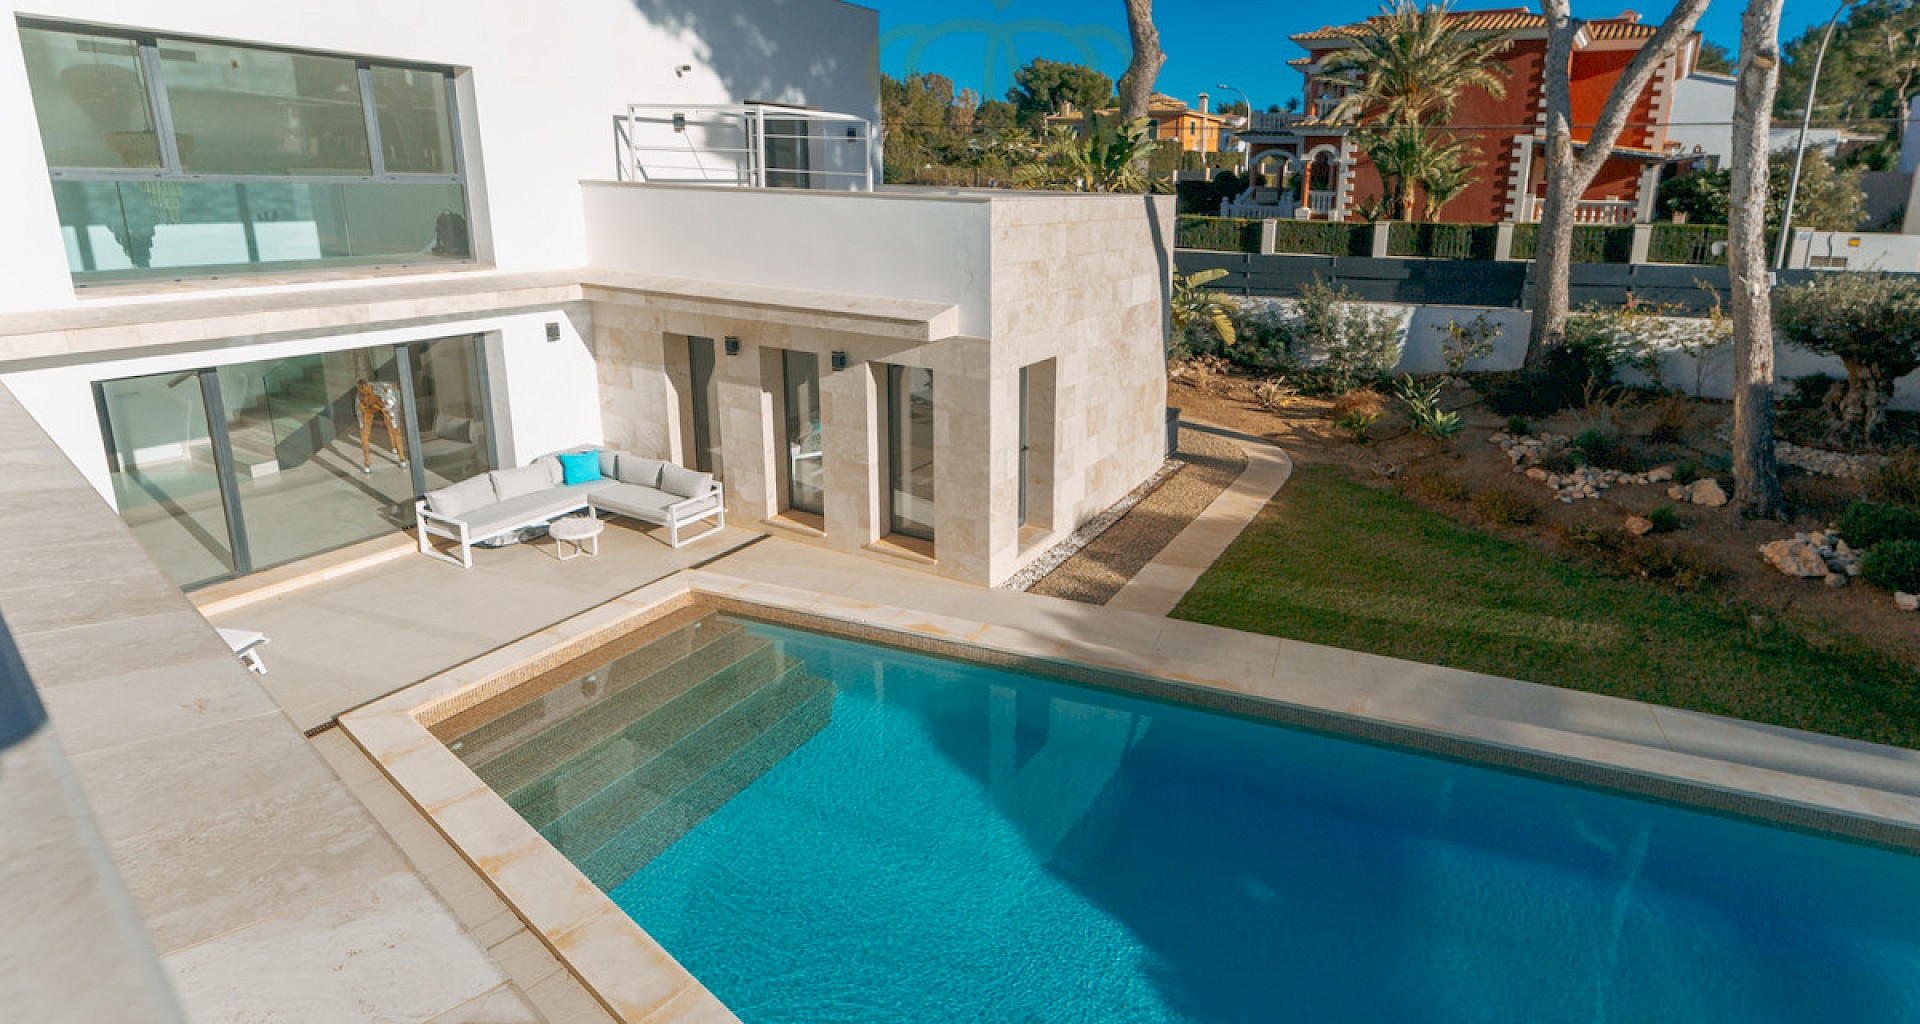 KROHN & LUEDEMANN Large modern villa in Santa Ponsa with pool for sale Grosse Villa in Santa Ponsa 23